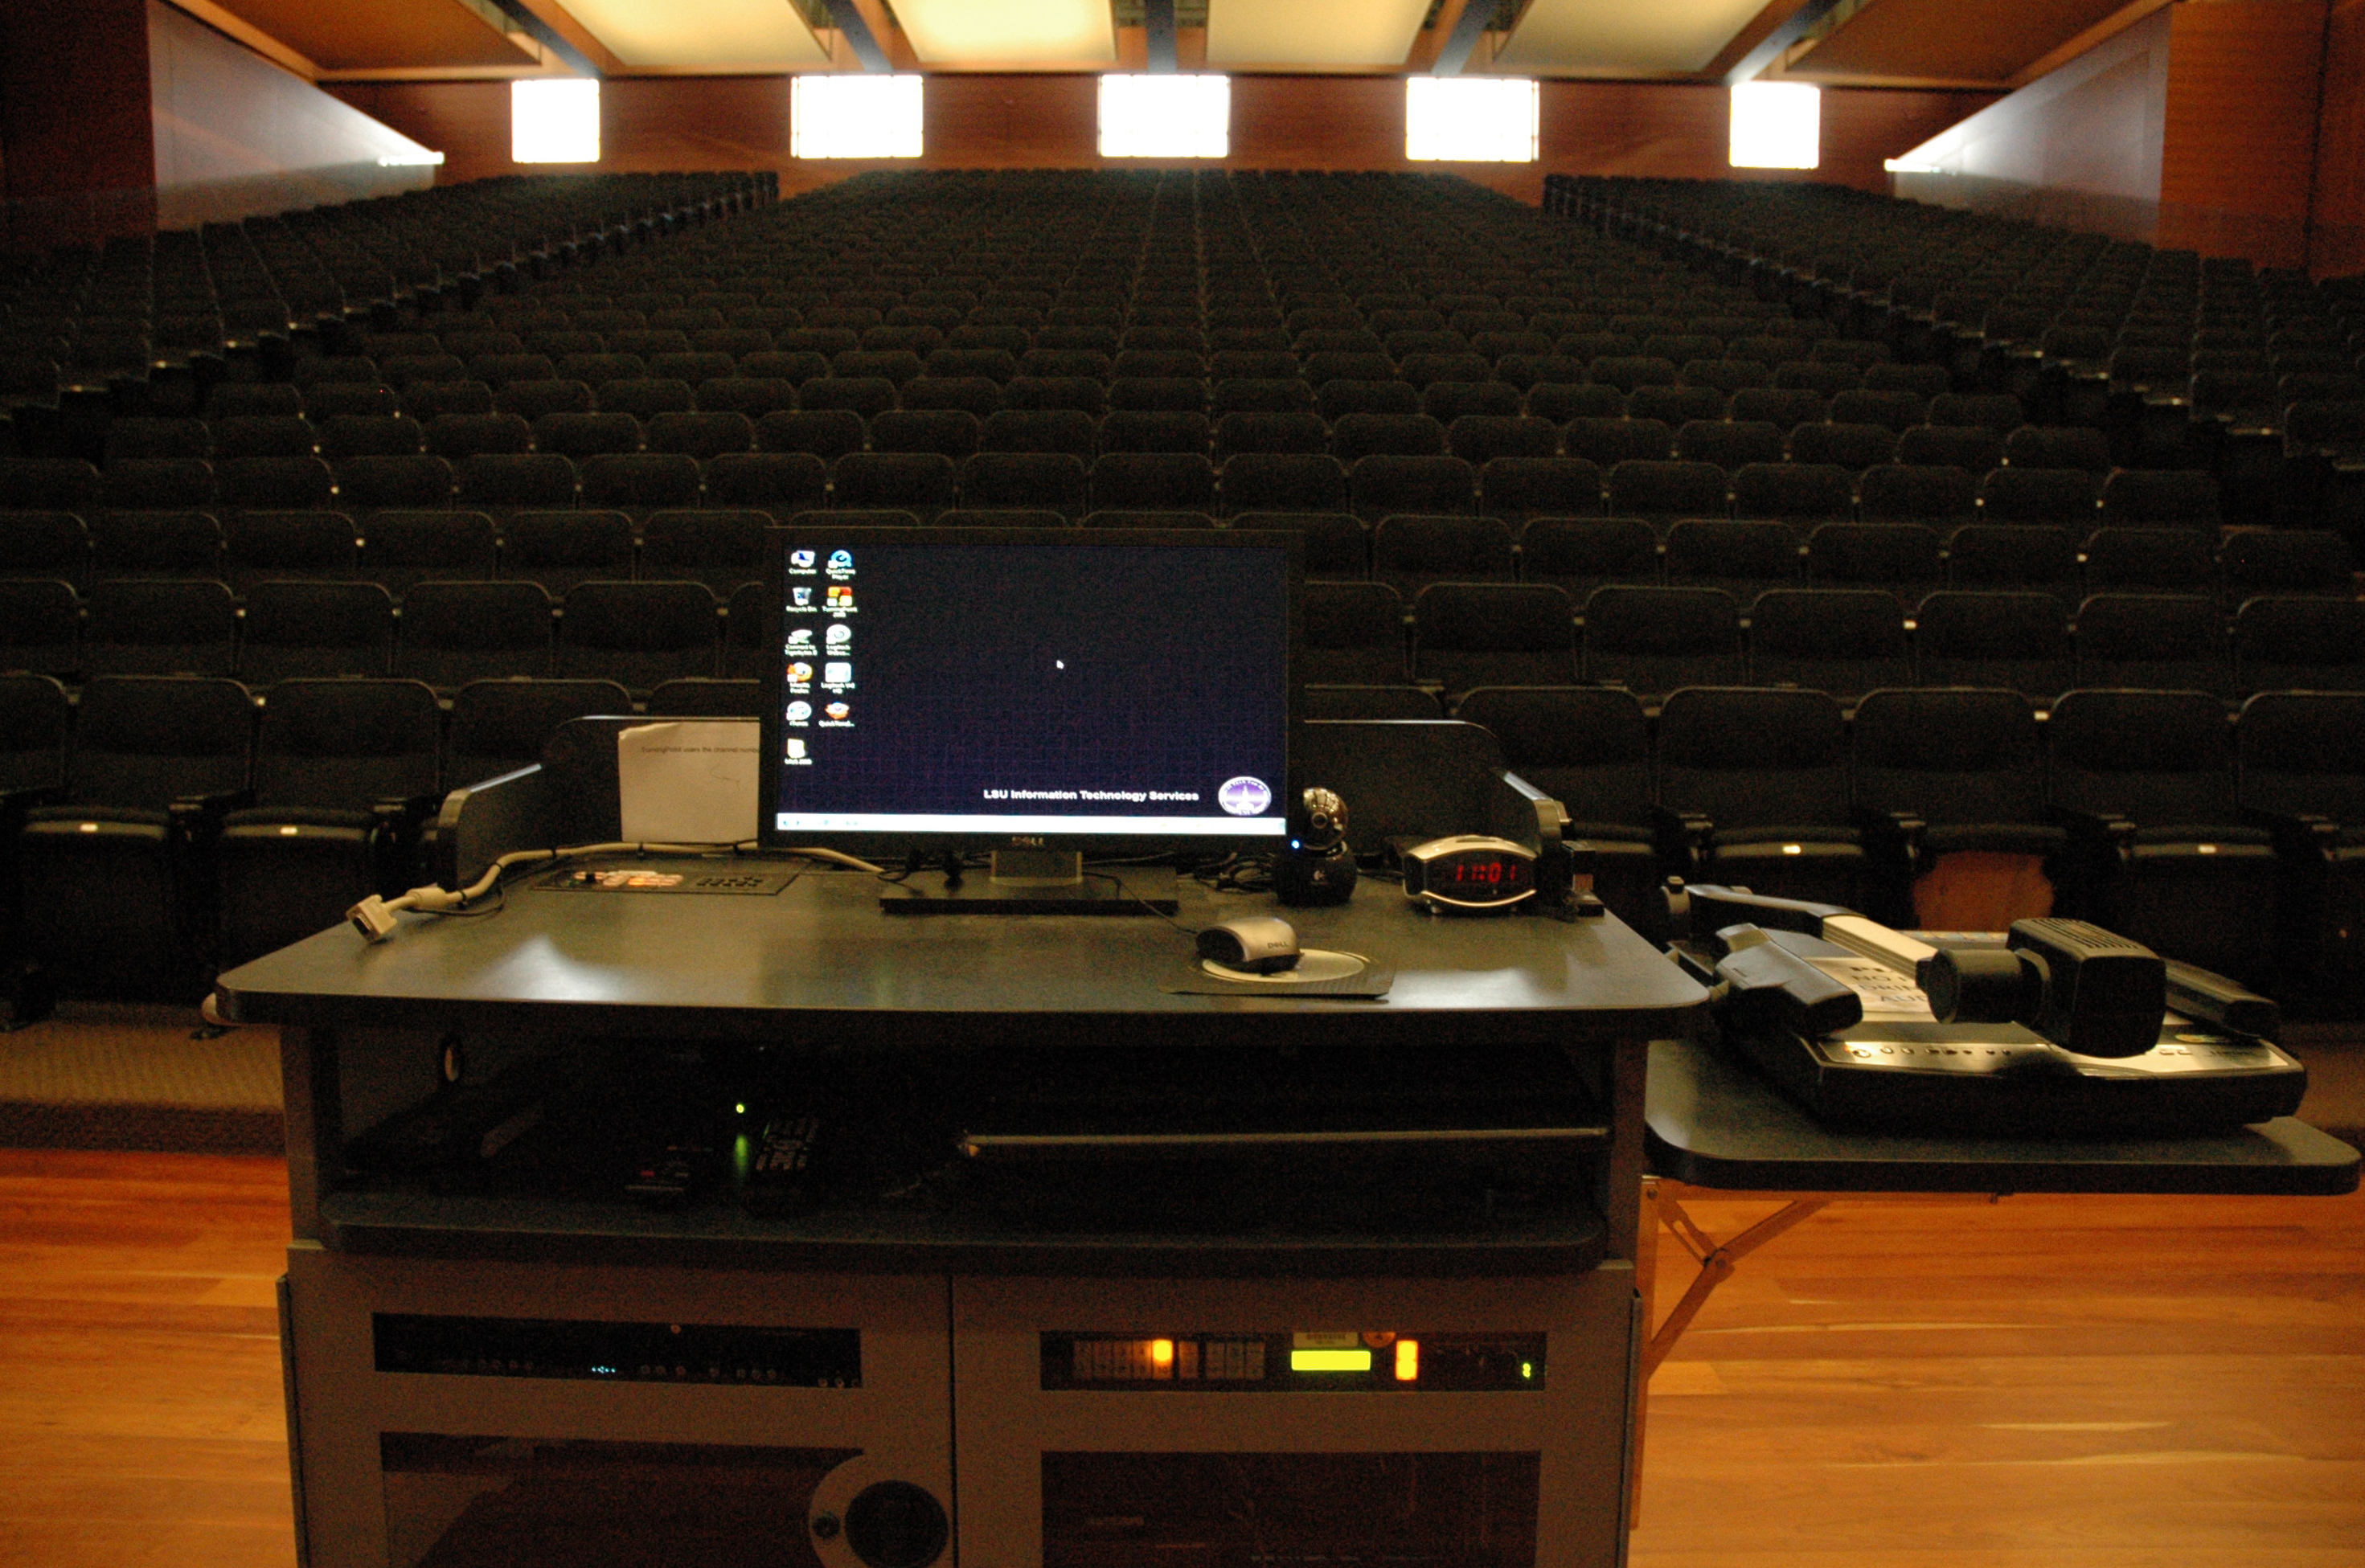 campbell's Multimedia podium overlooking classroom